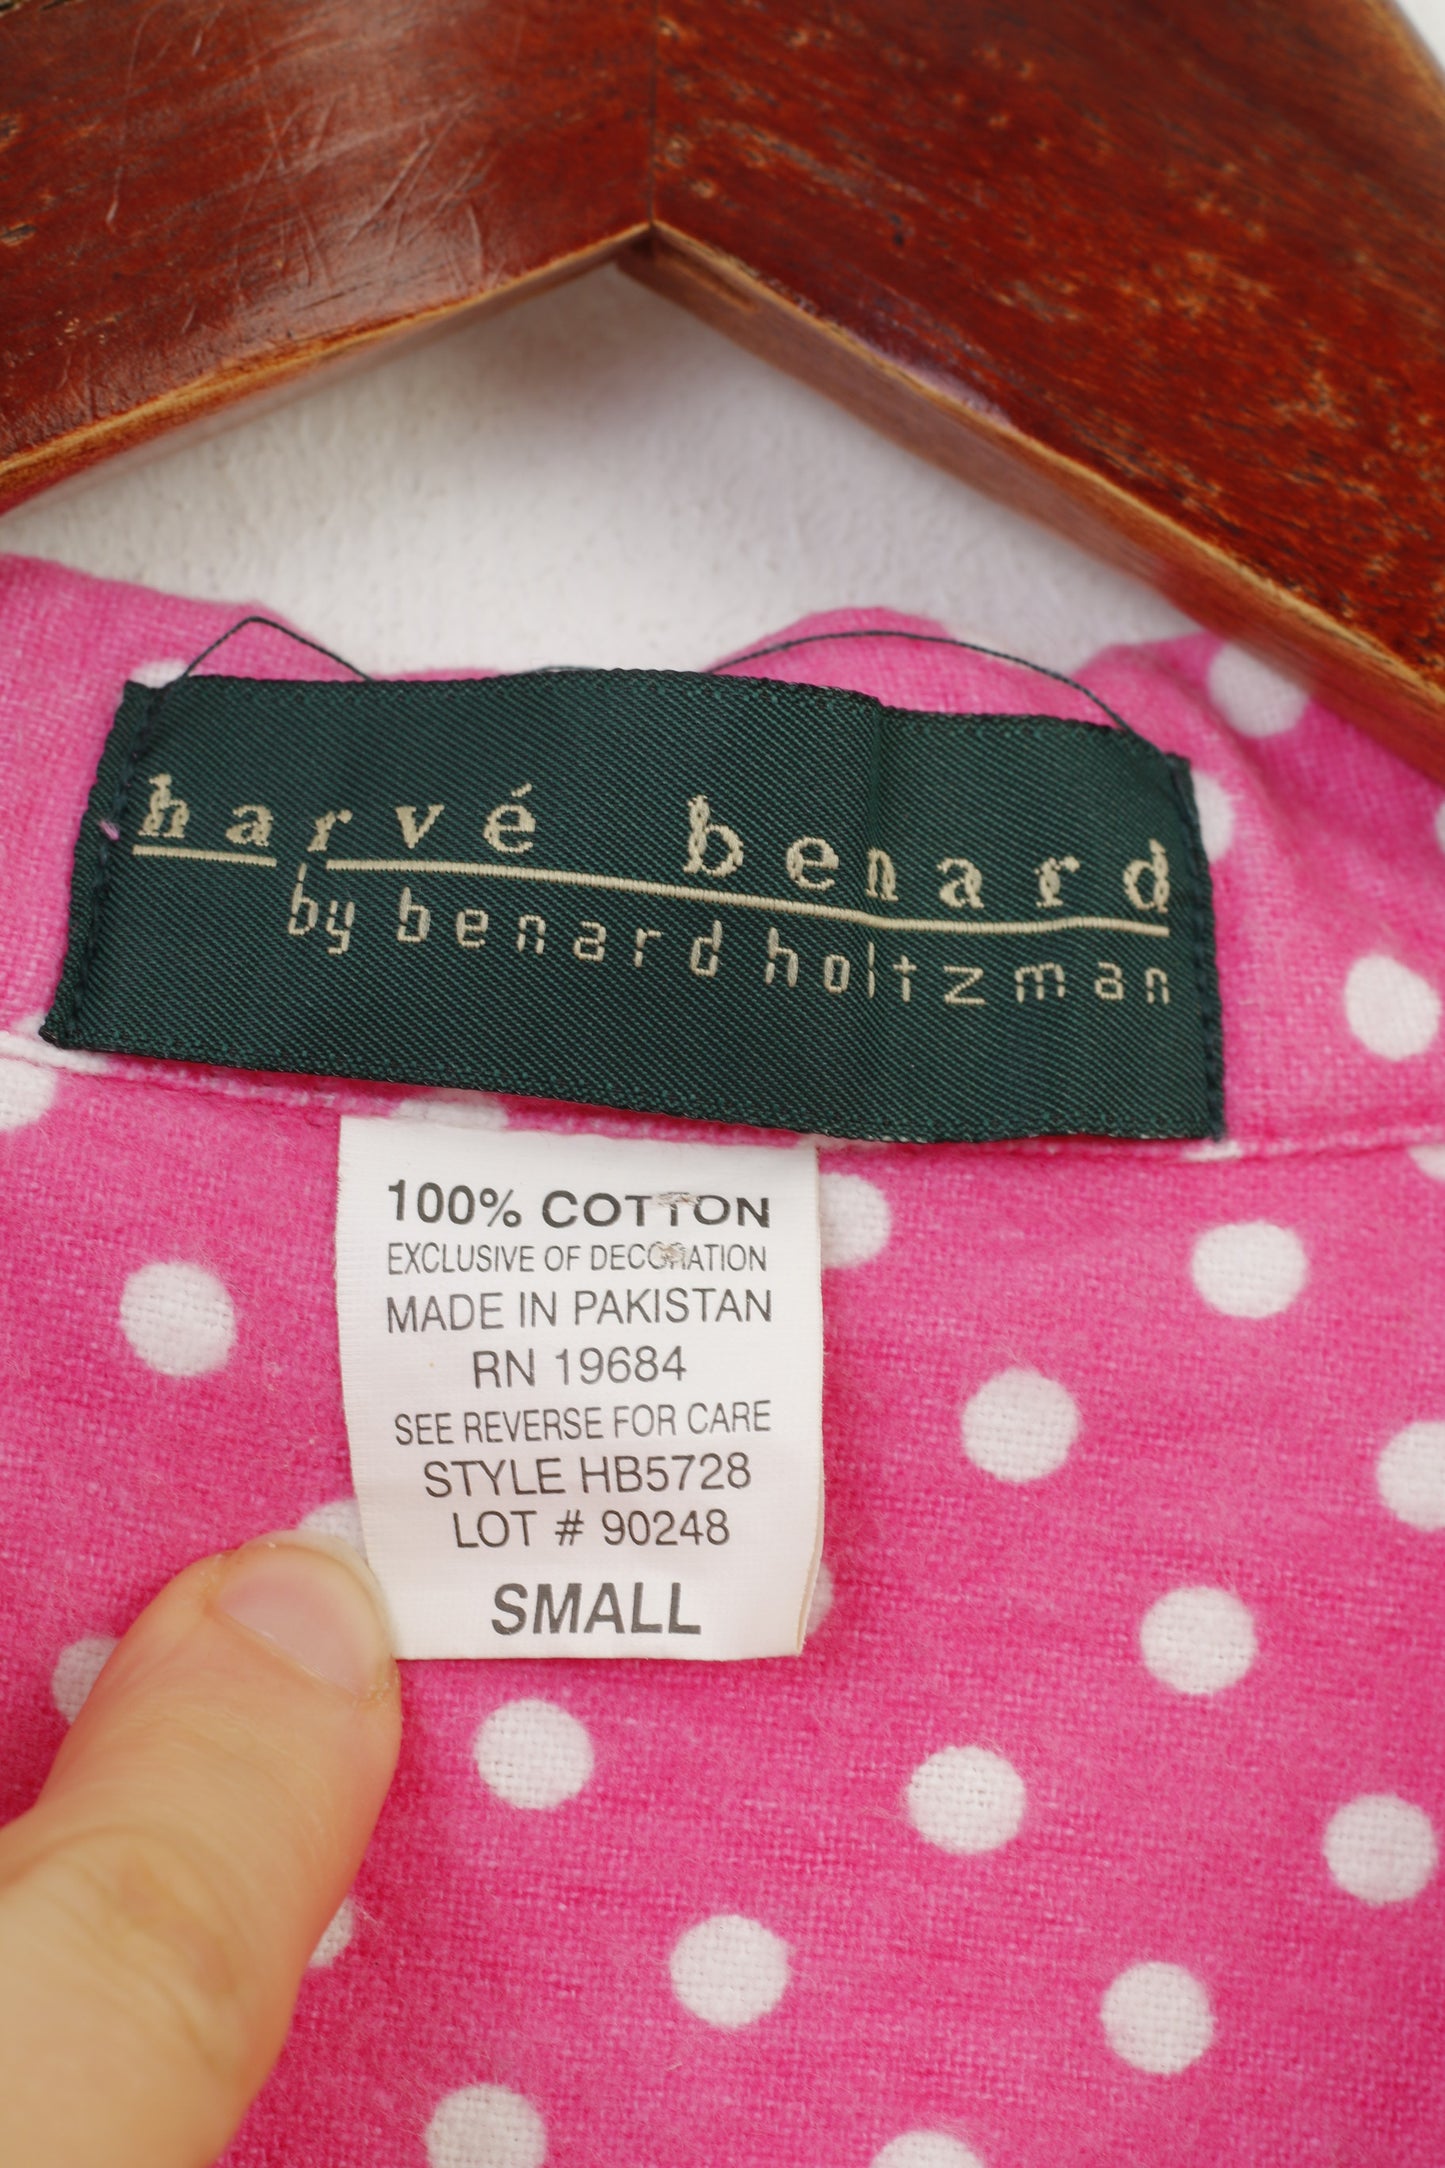 Harve Benard by bernard holtzman Women S Sleep Shirt Polka Dots Pink Bottoms Pajamas  Cotton Top